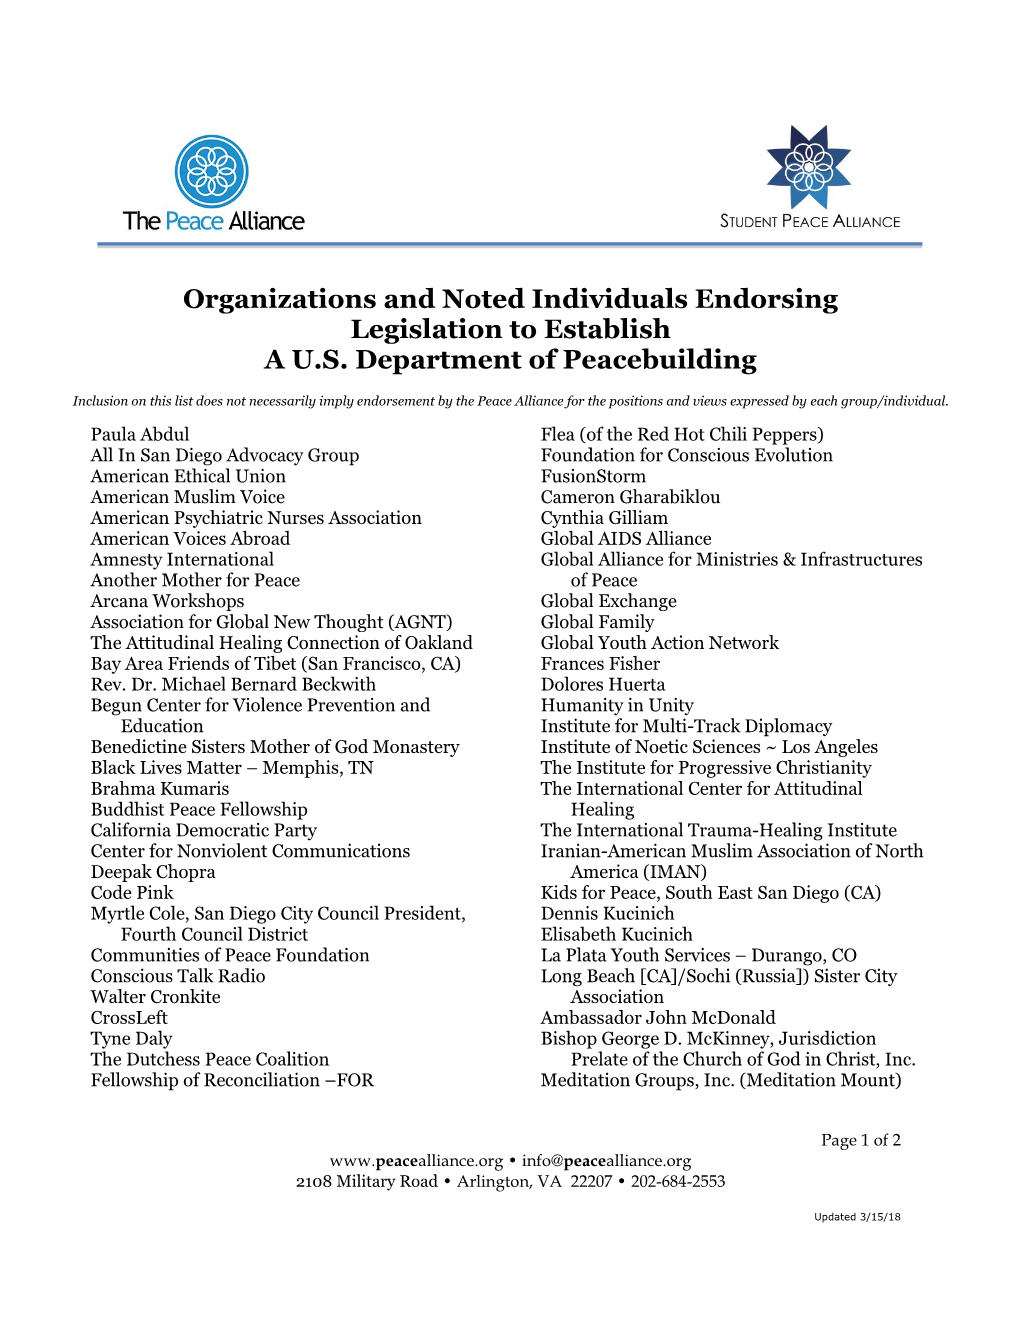 Organizations and Noted Individuals Endorsing Legislation to Establish a U.S. Department of Peacebuilding